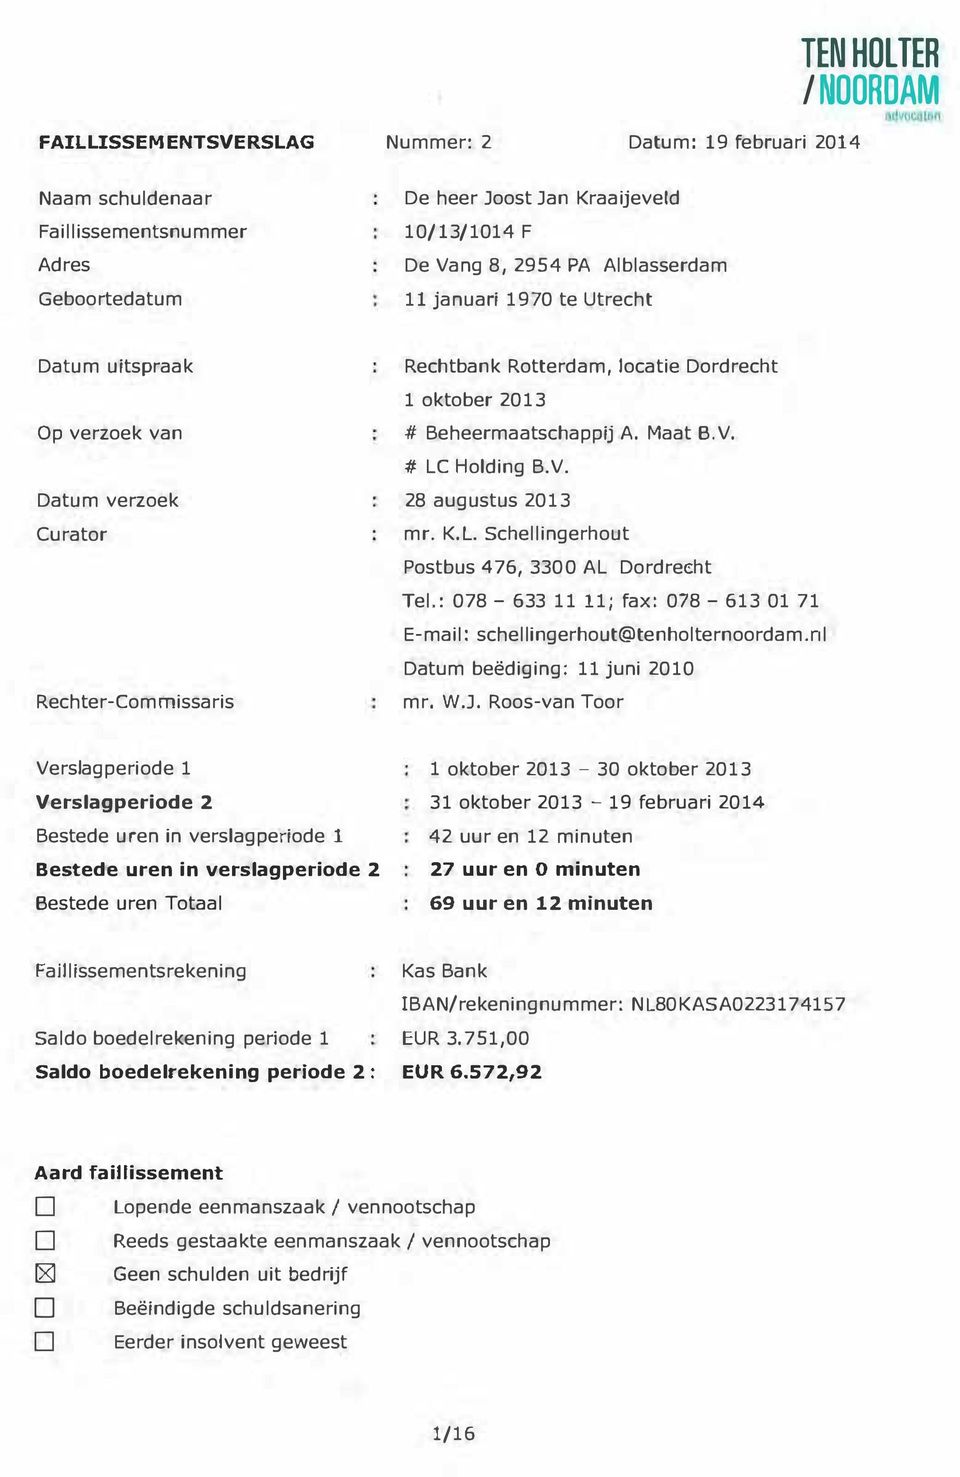 # LC Holding B.V. 28 augustus 2013 mr. K.L. Schellingerhout Postbus 476, 3300 AL ordree:ht Tel.: 078-633 11 11; fax: 078-613 01 71 E-ma i I: schellingerhout@tenholternoordam.